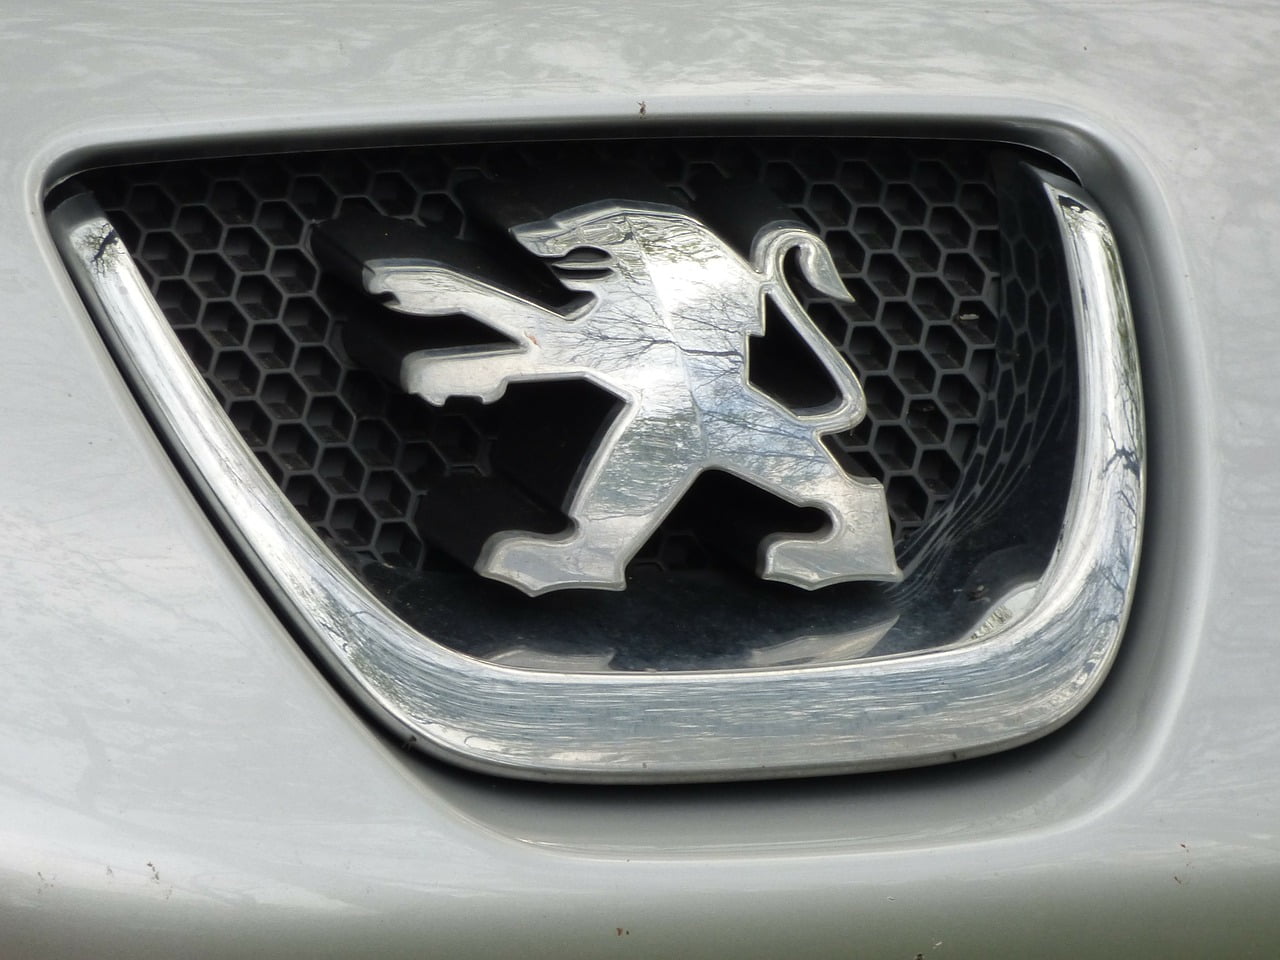 Consommation Carburant Pollution Peugeot Realite Test Triche Publicite